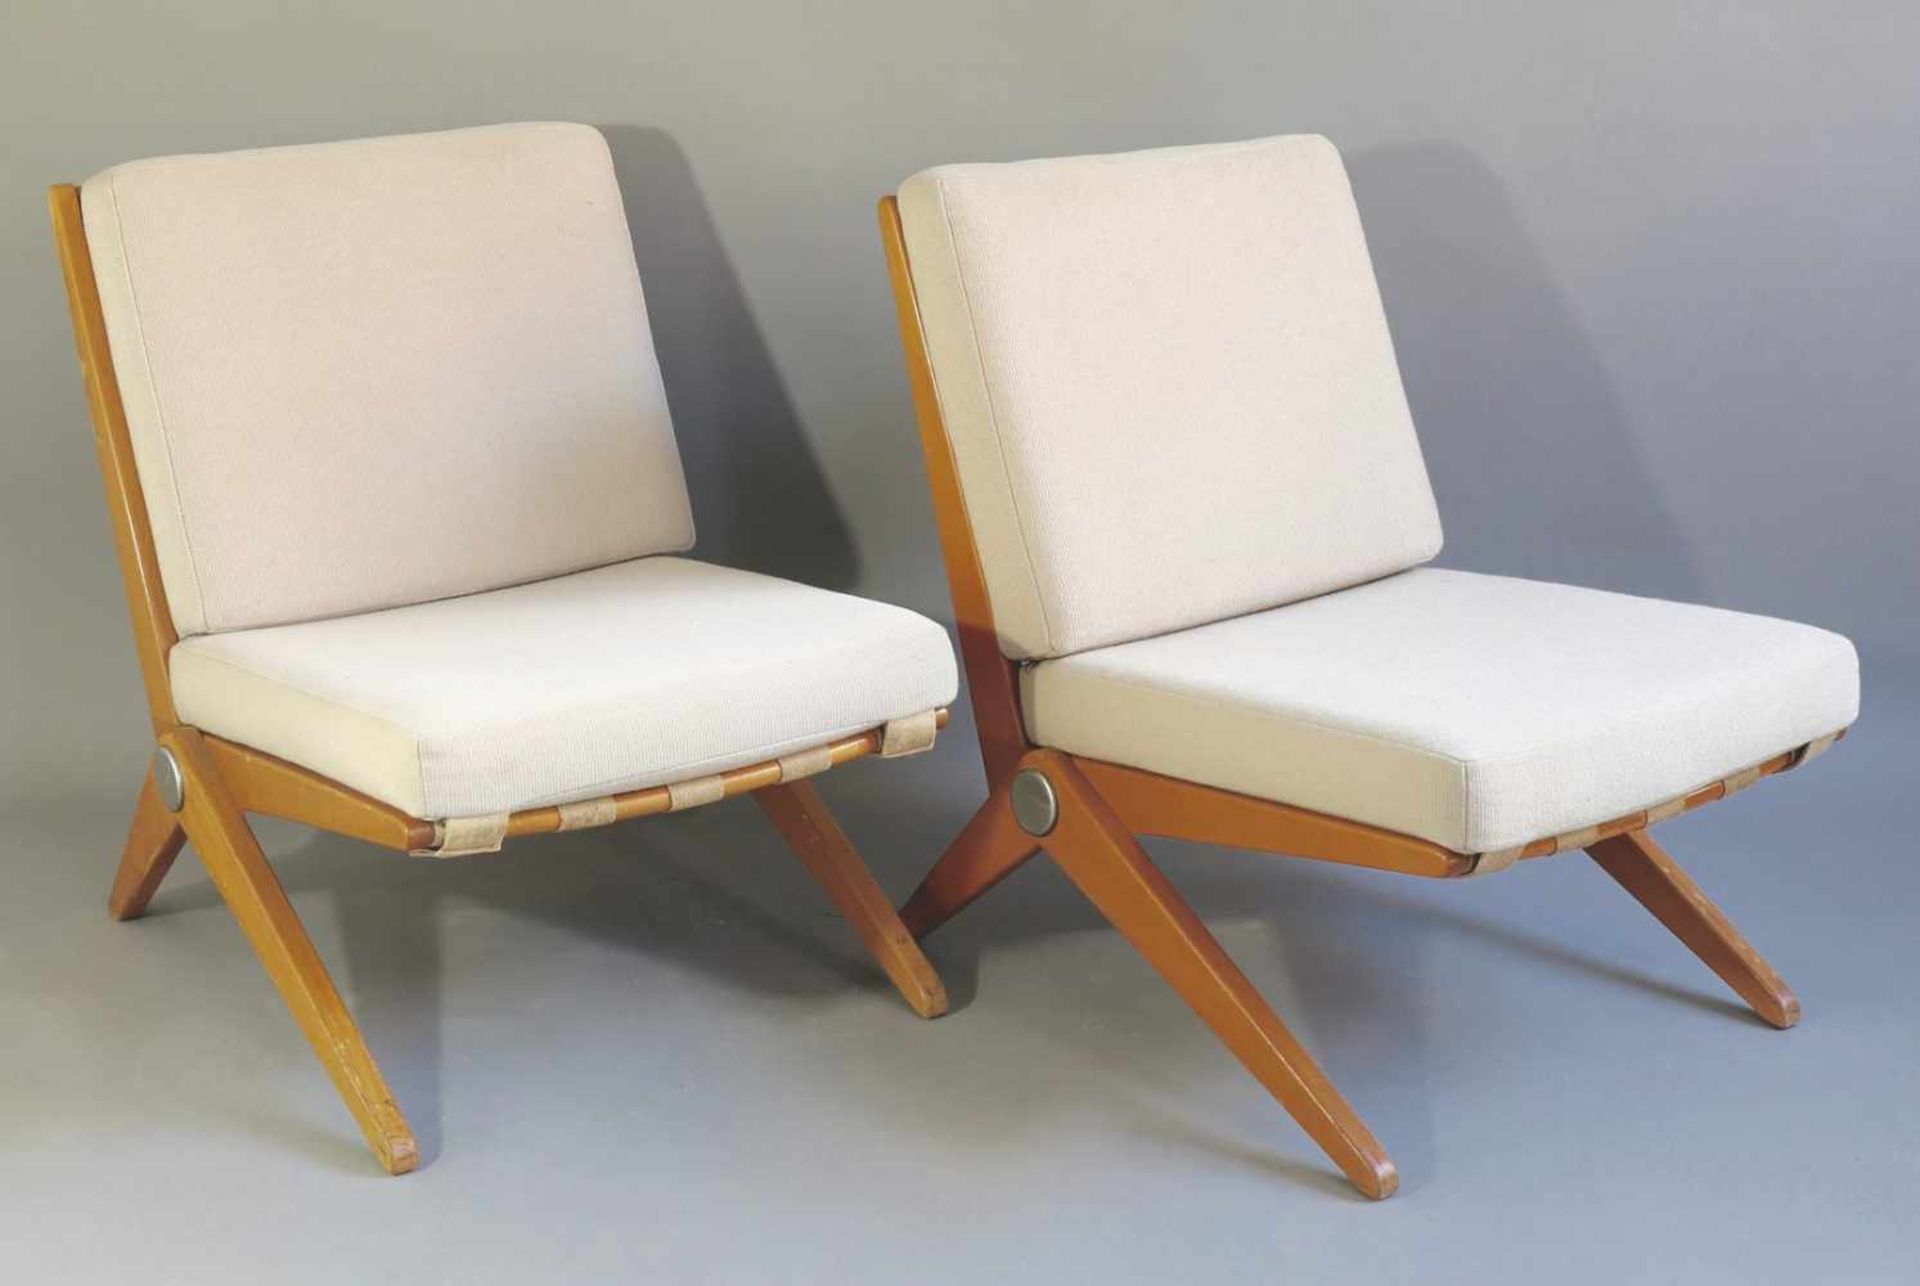 Pierre JeanneretKnoll InternationalDesign 19482 Sessel Modell Scissor Chair. Entwurf von 1948.